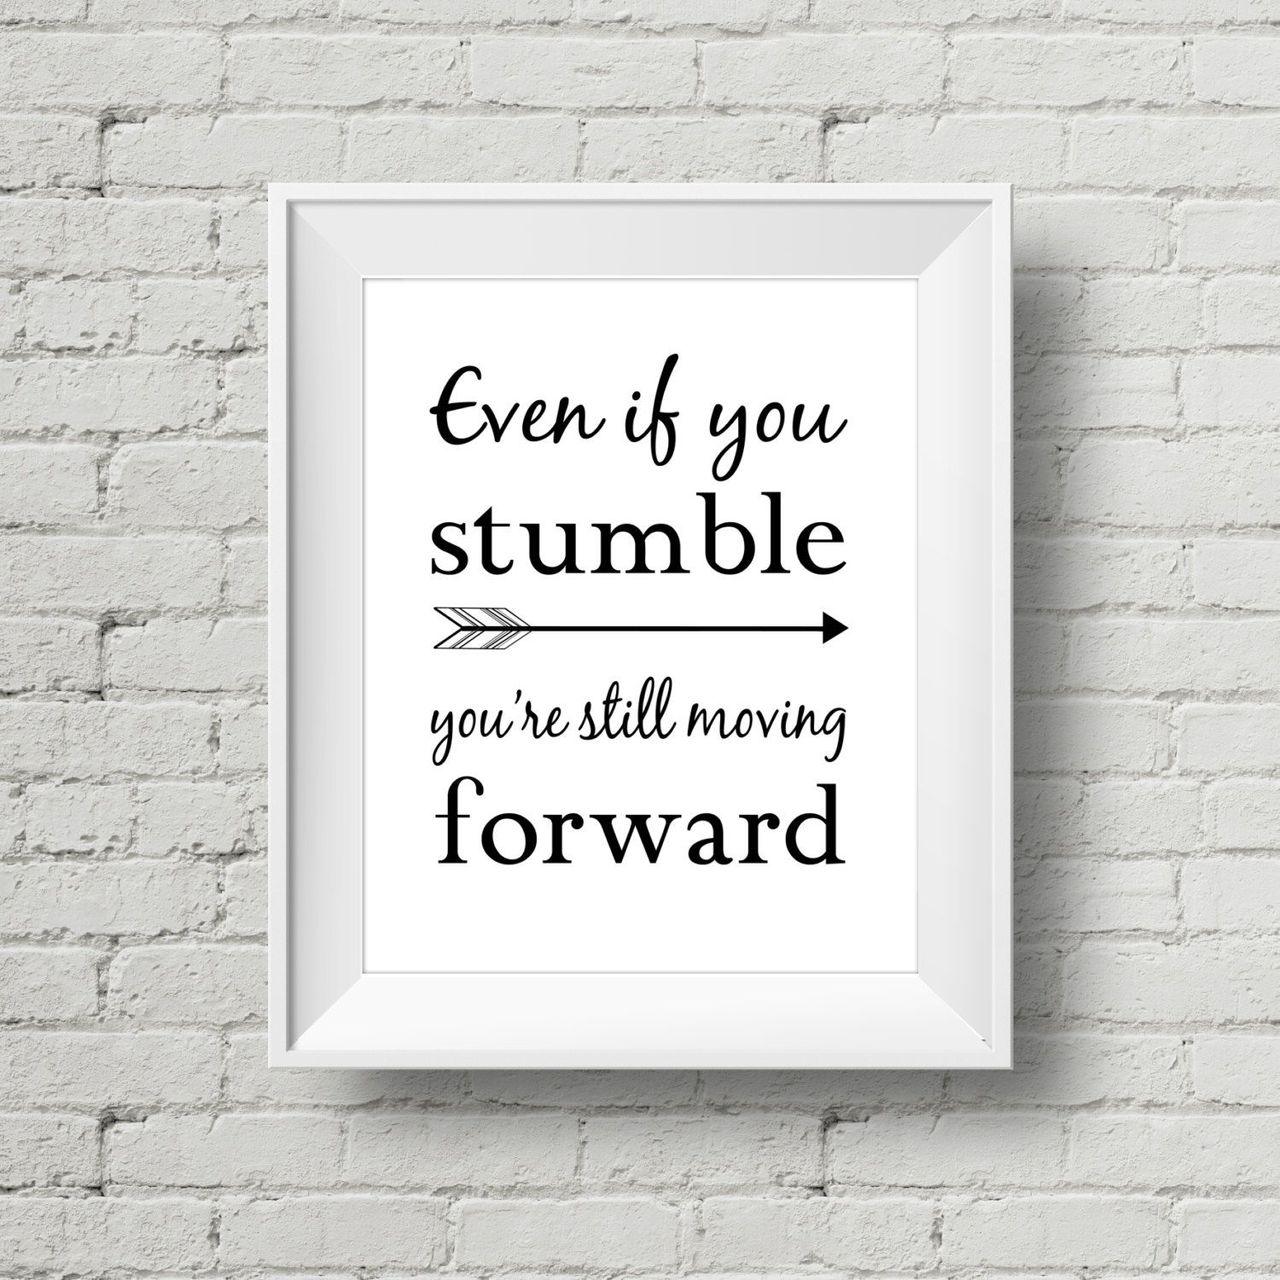 Even if you stumble